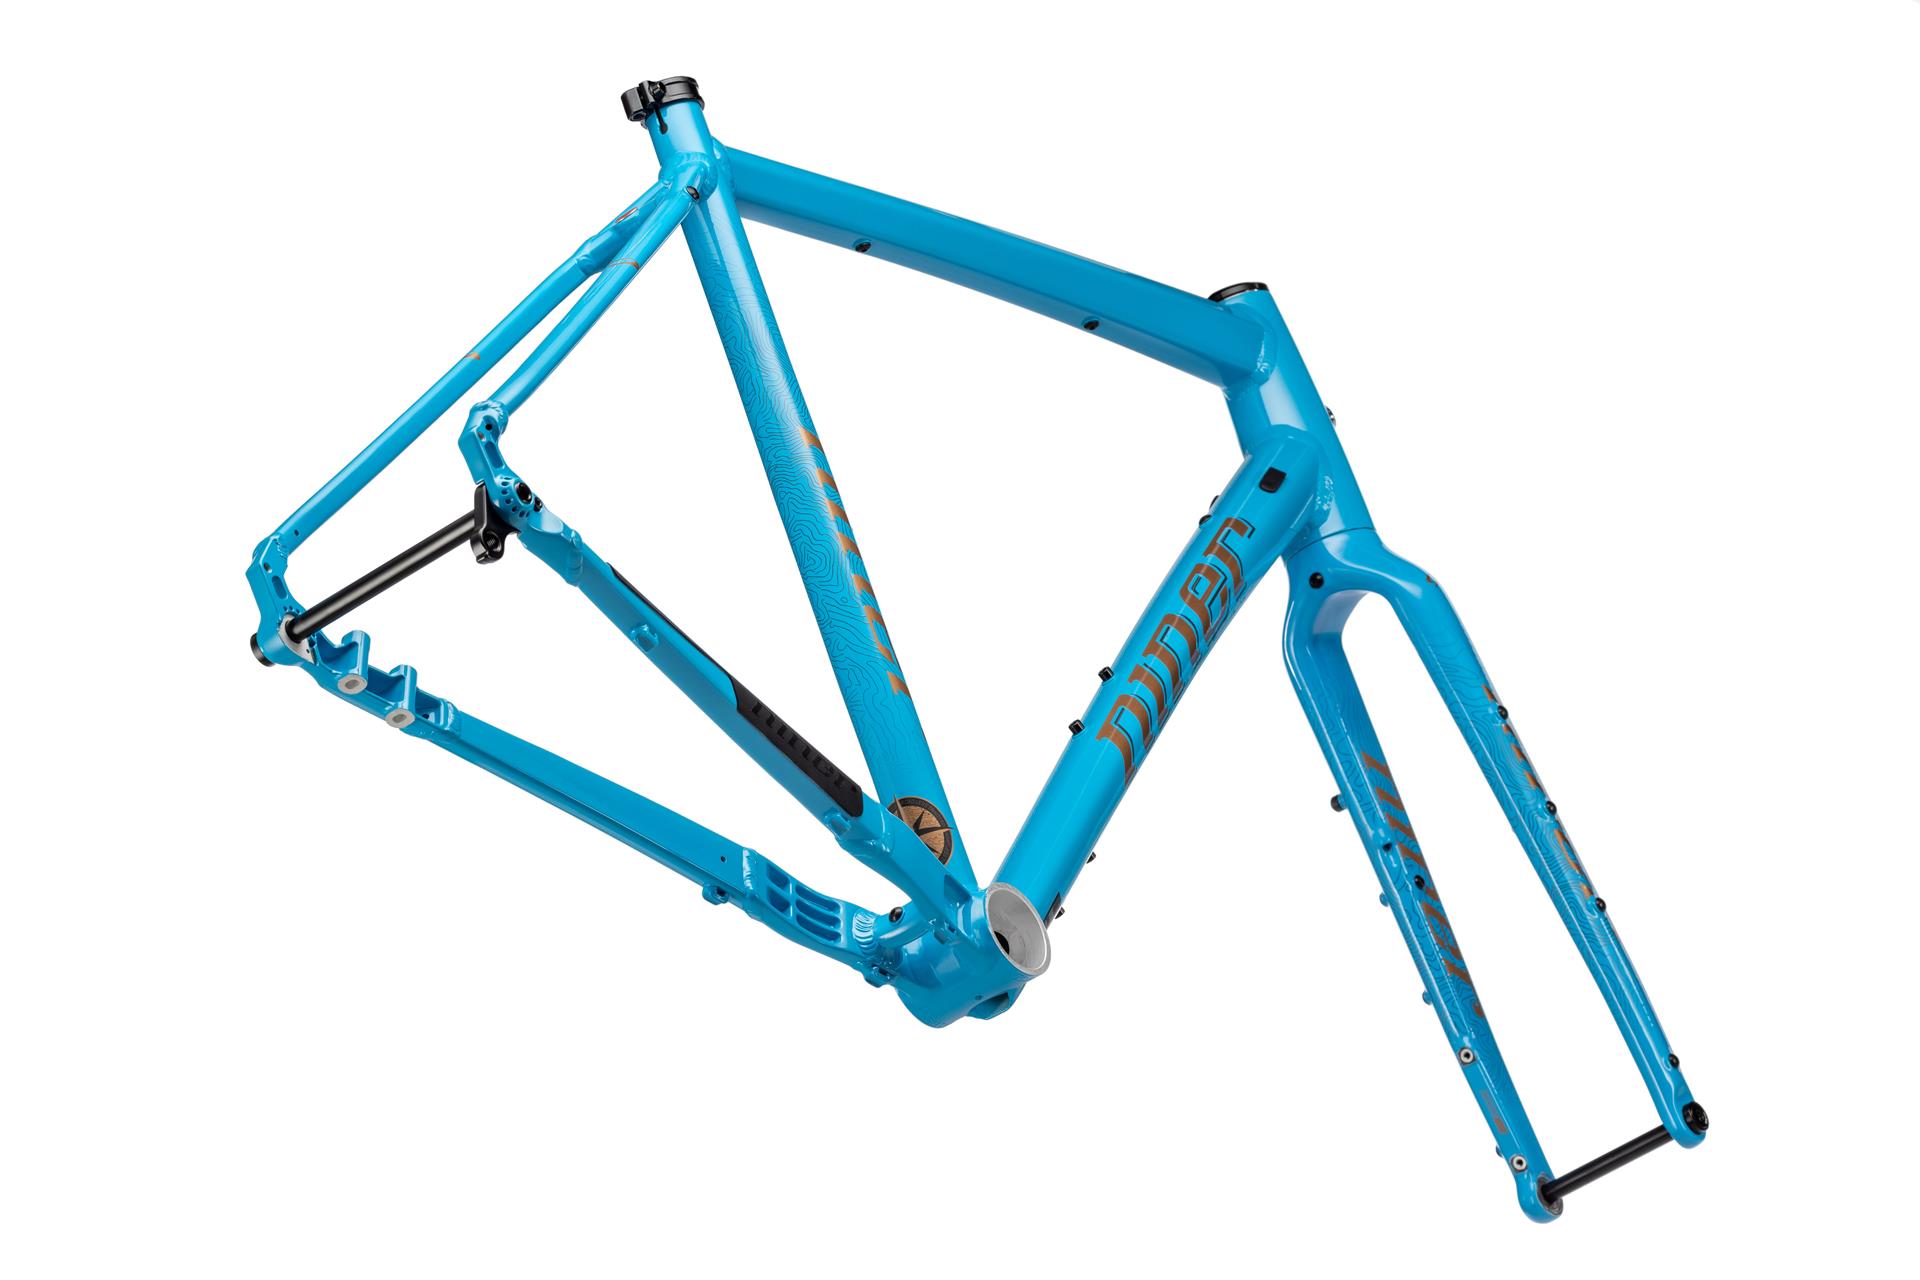 Niner RLT 2-star велосипед, серый/голубой, 50